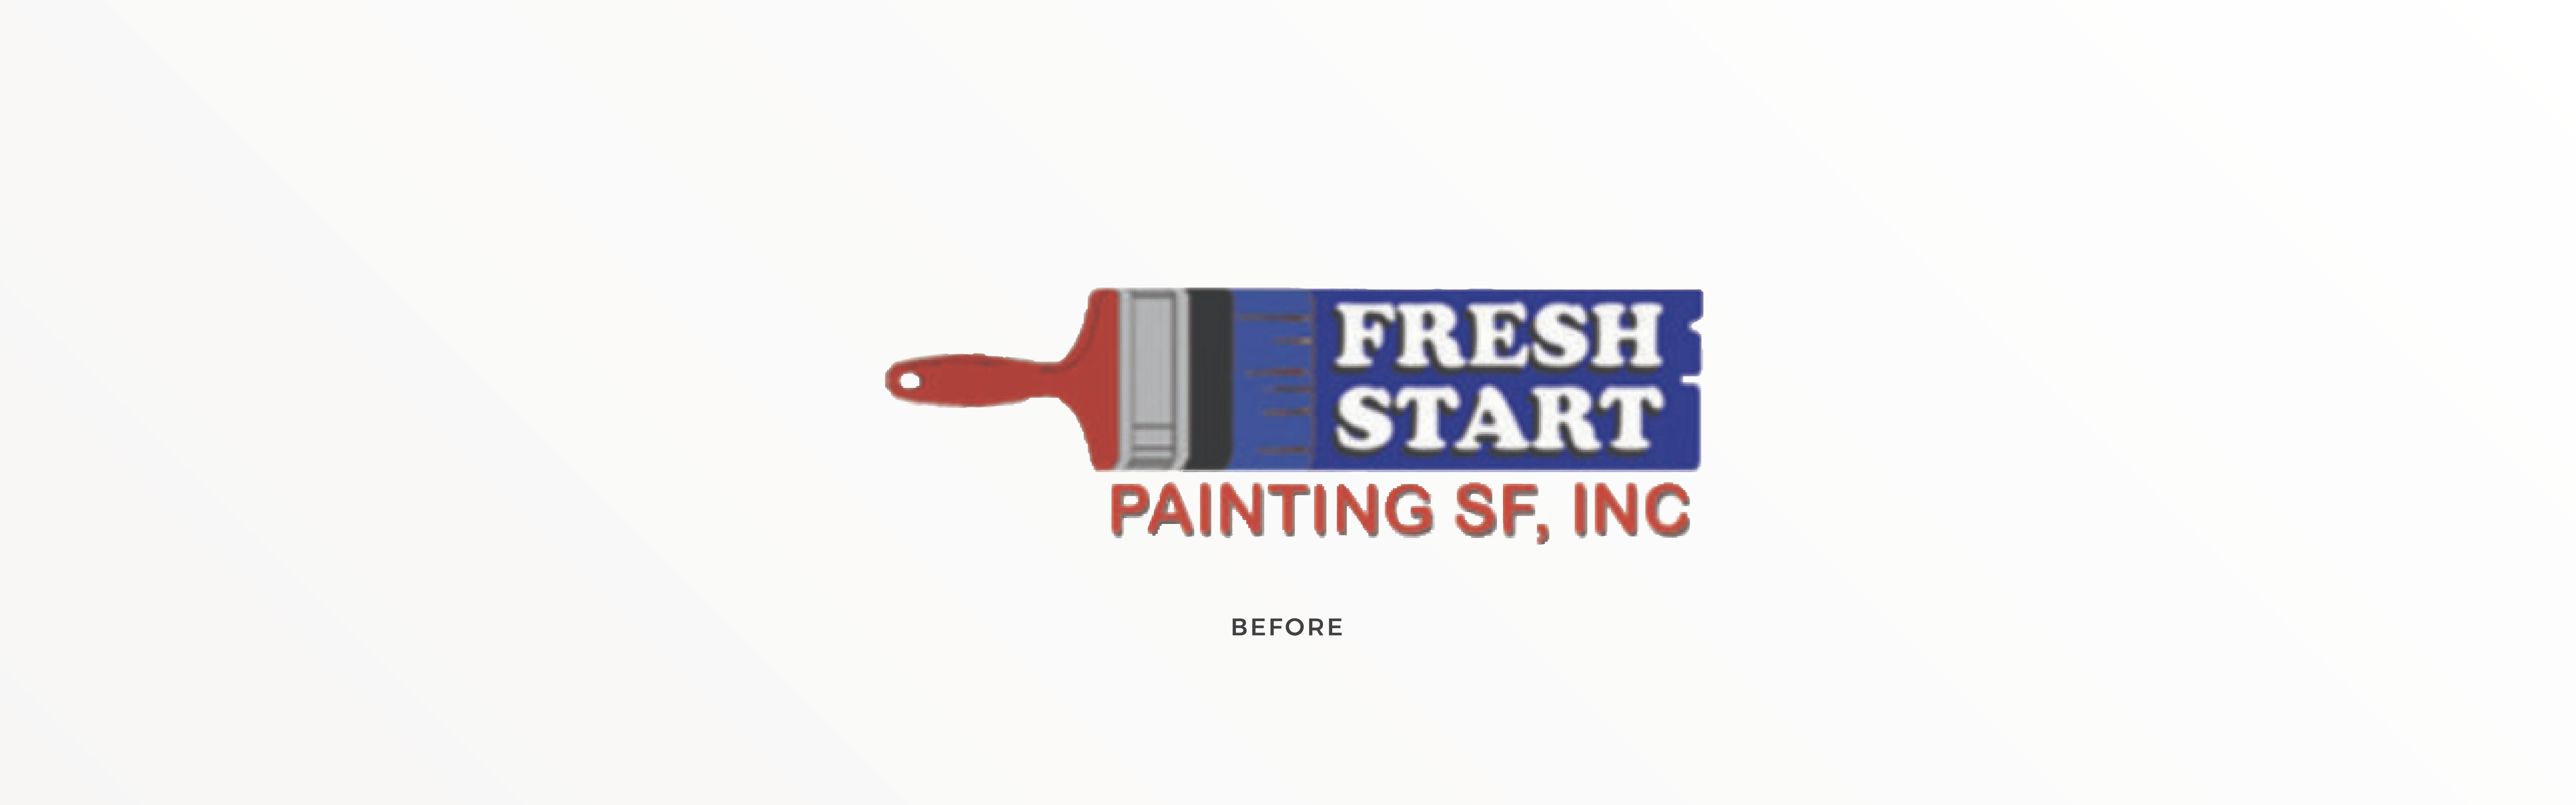 Fresh Start Painting logo before